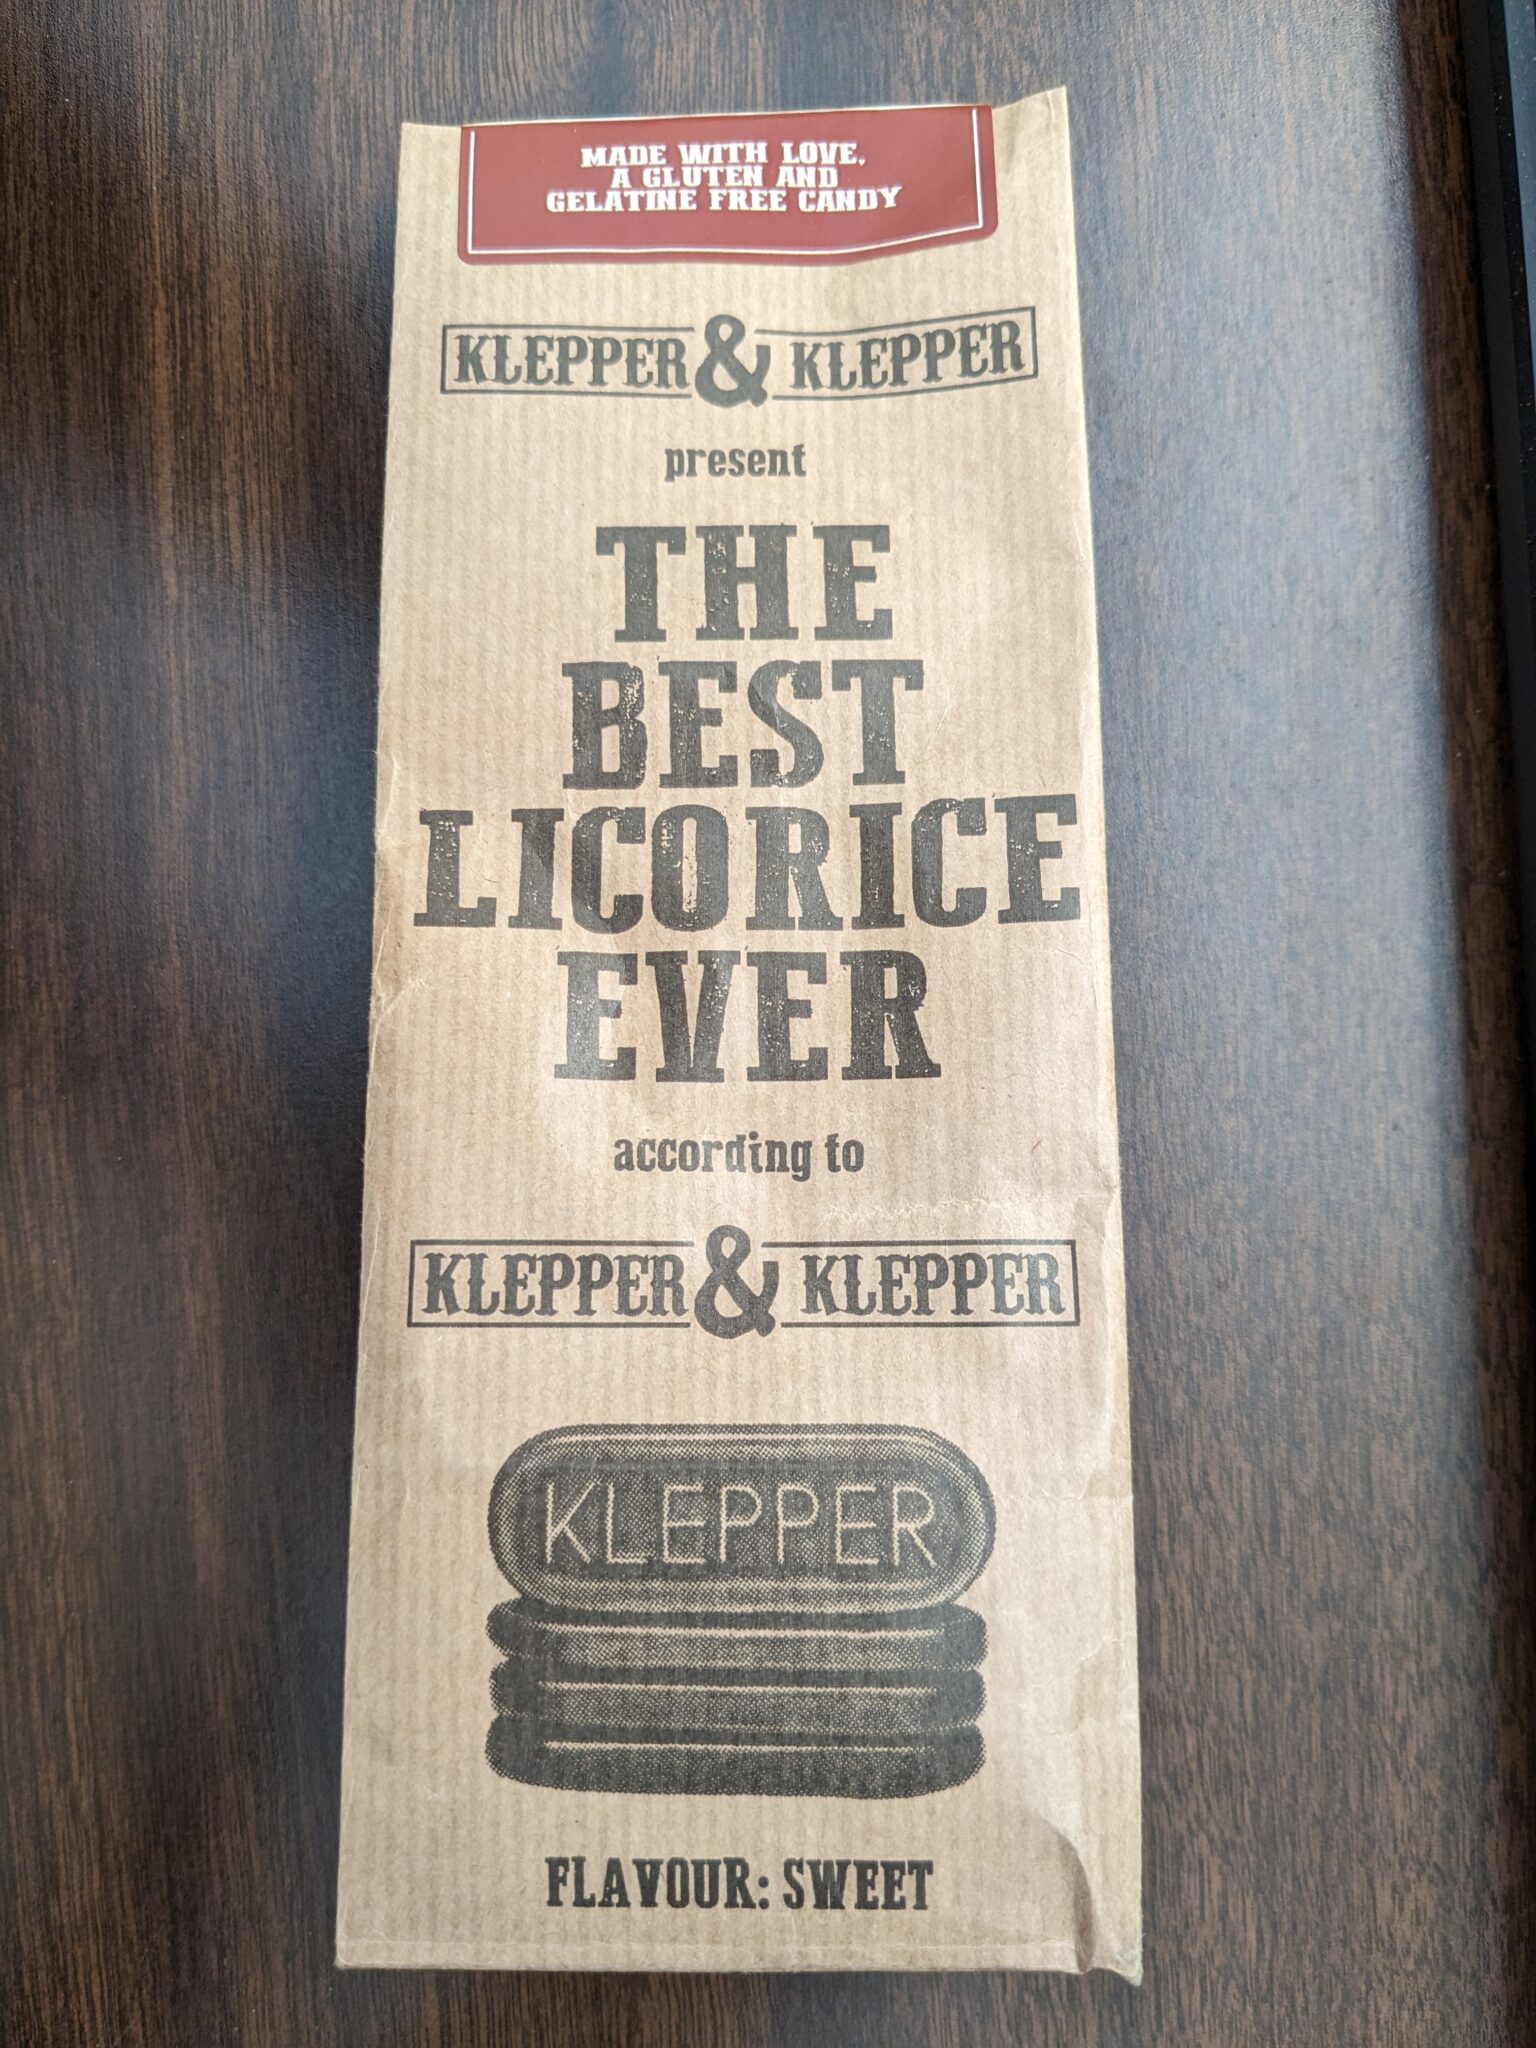 Klepper & Klepper Sweet Licorice